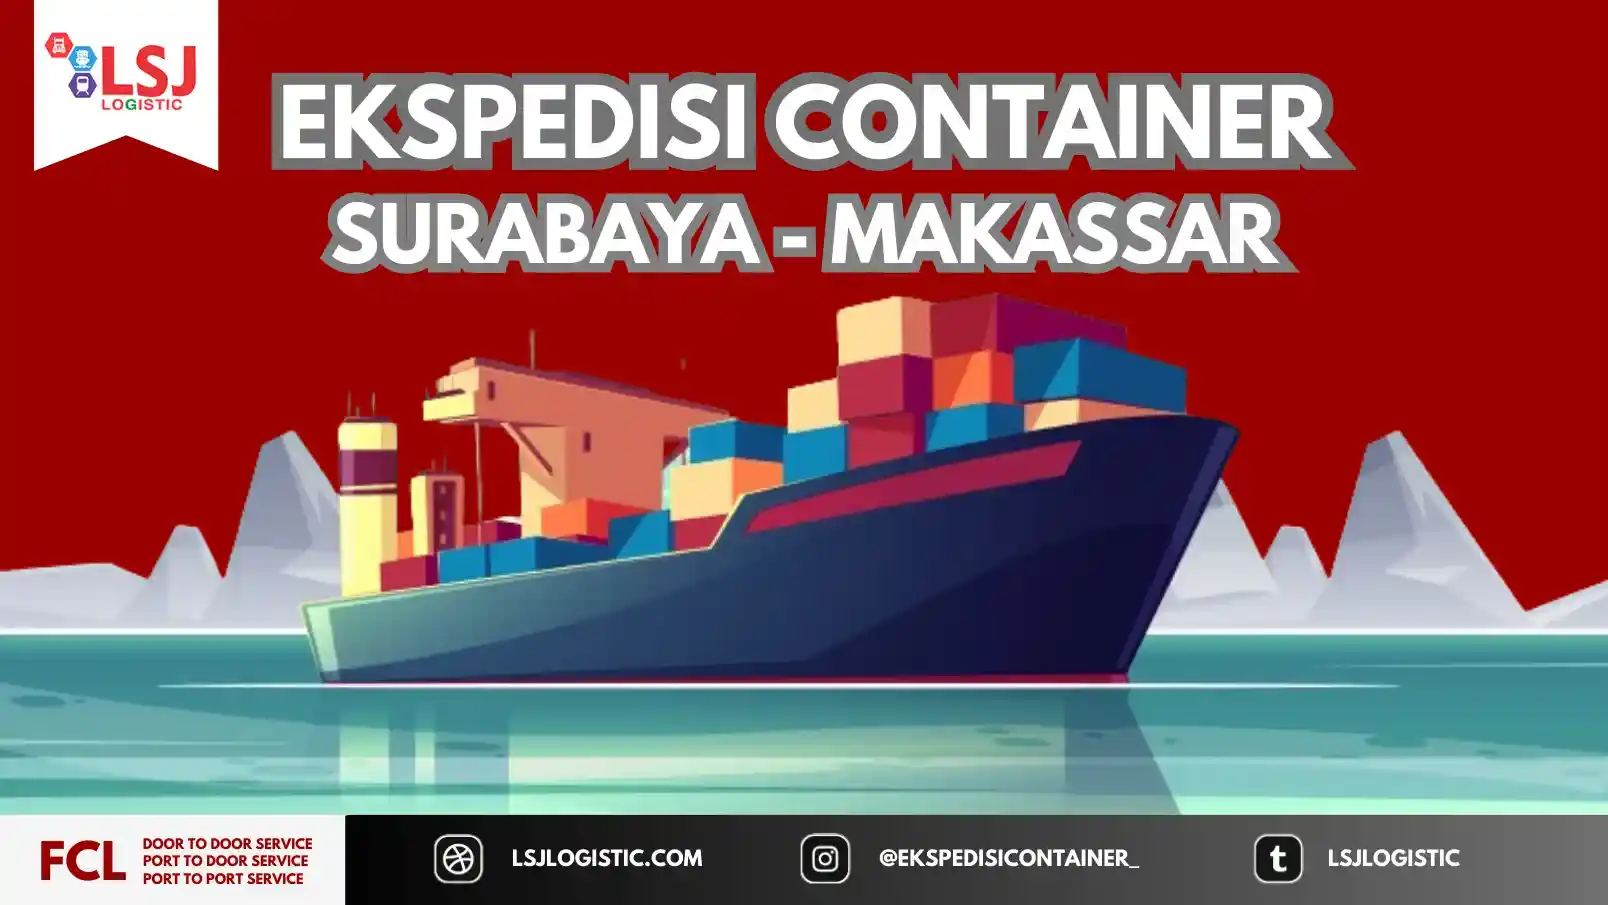 Ongkos Kirim Container Surabaya Makassar